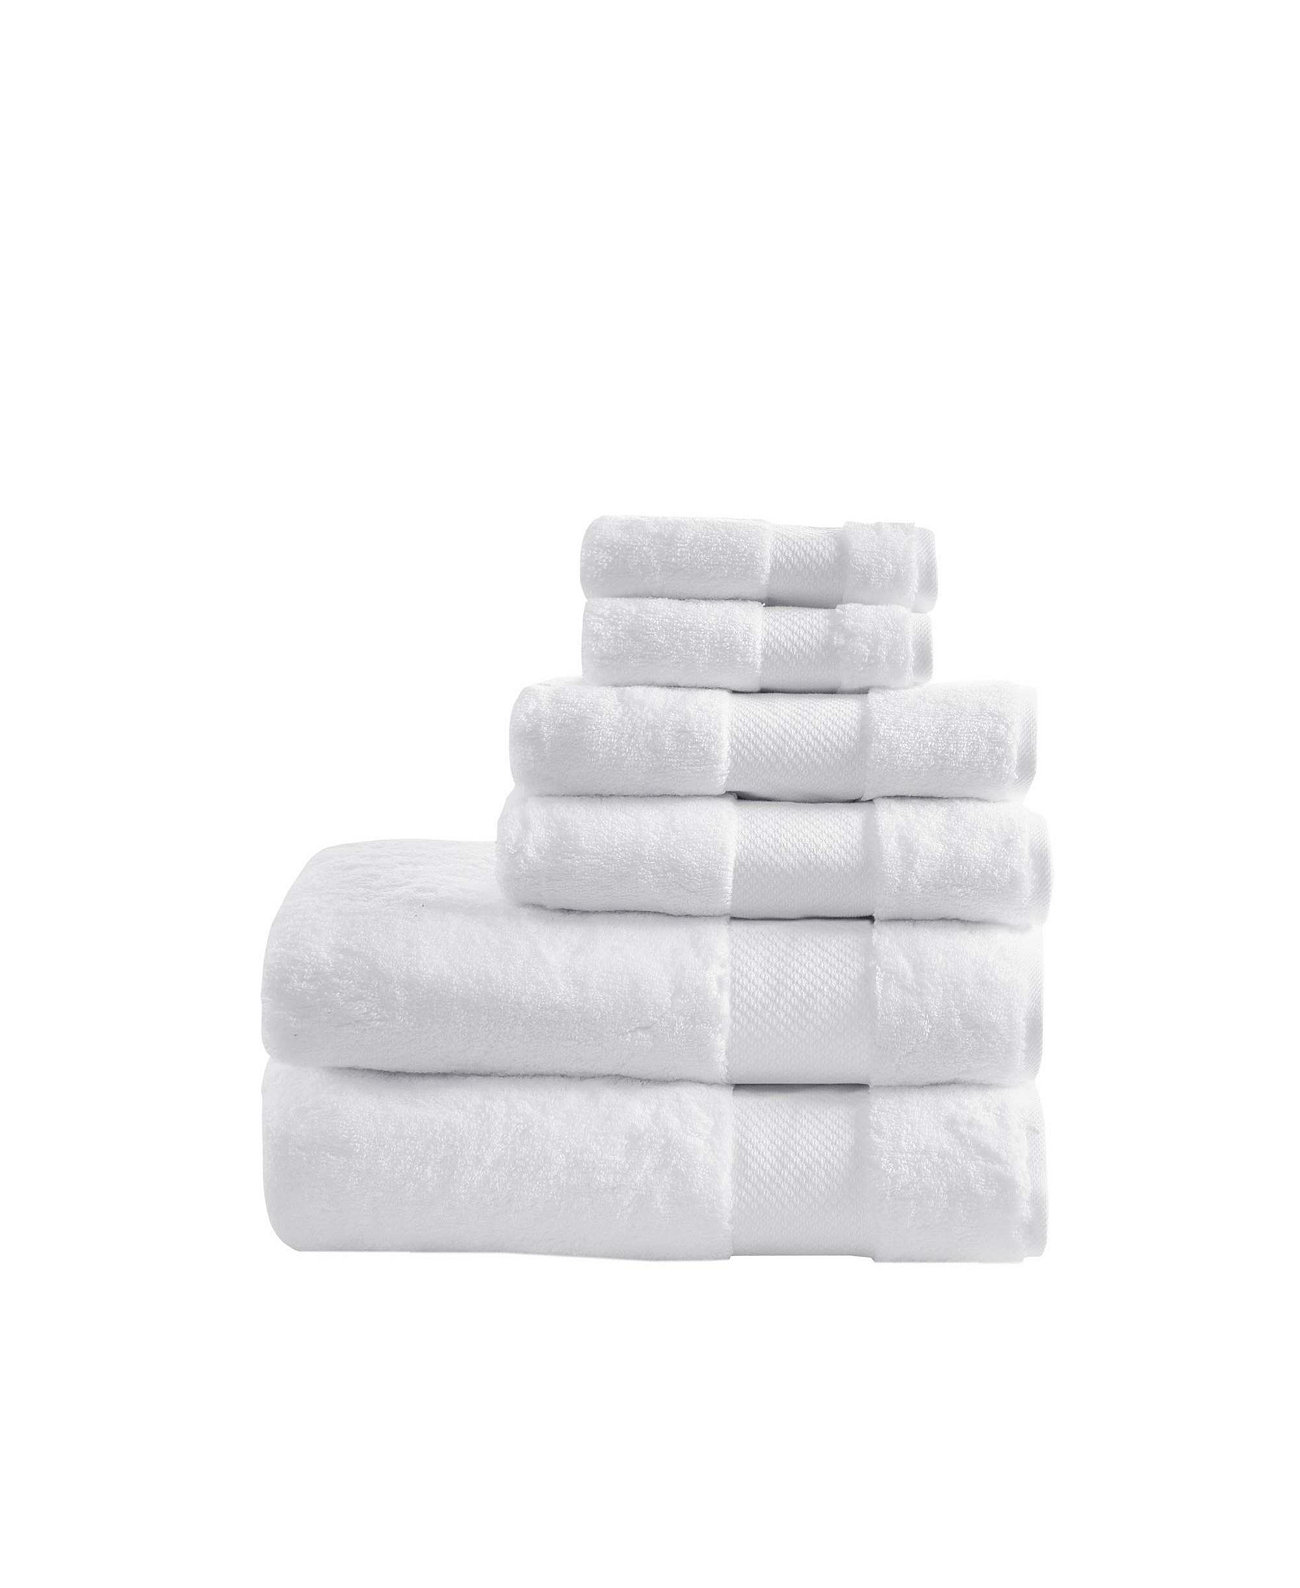 White полотенца